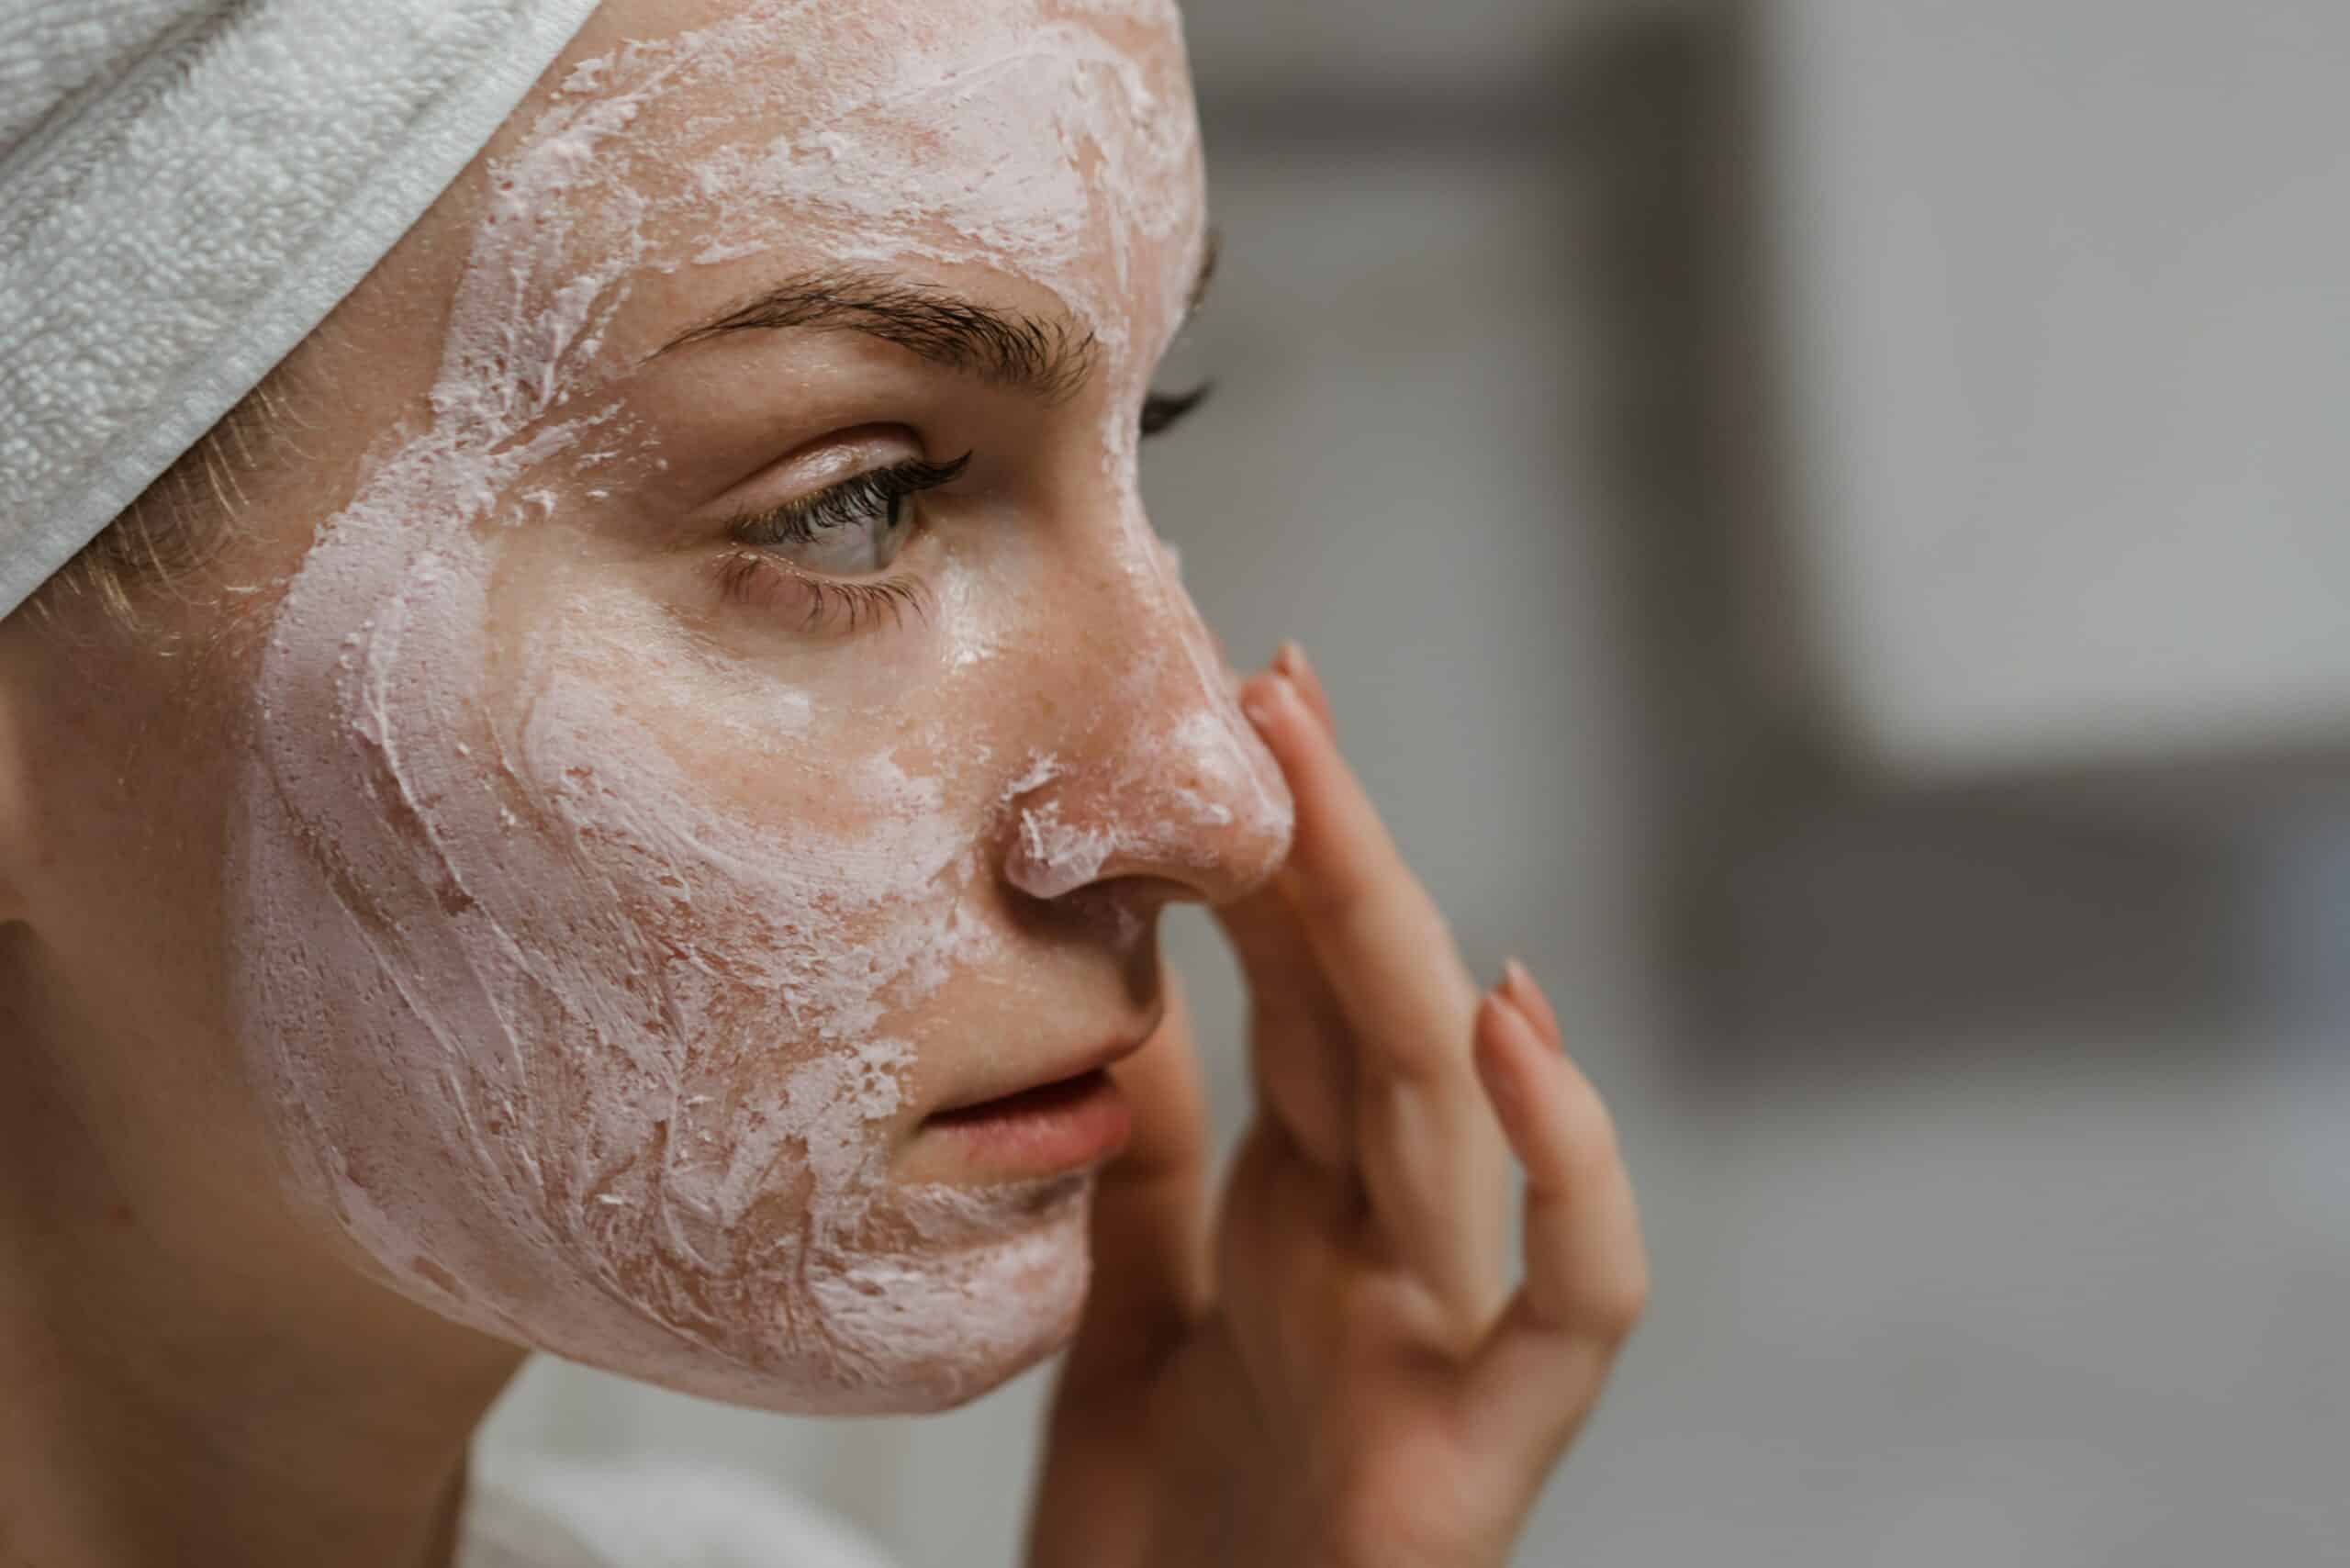 Ilustrasi Love Your Skin Day, Kulitmu Juga Perlu Dirayakan!/Photo by Polina Kovaleva: https://www.pexels.com/photo/close-up-photo-of-a-woman-applying-facial-cream-5927811/